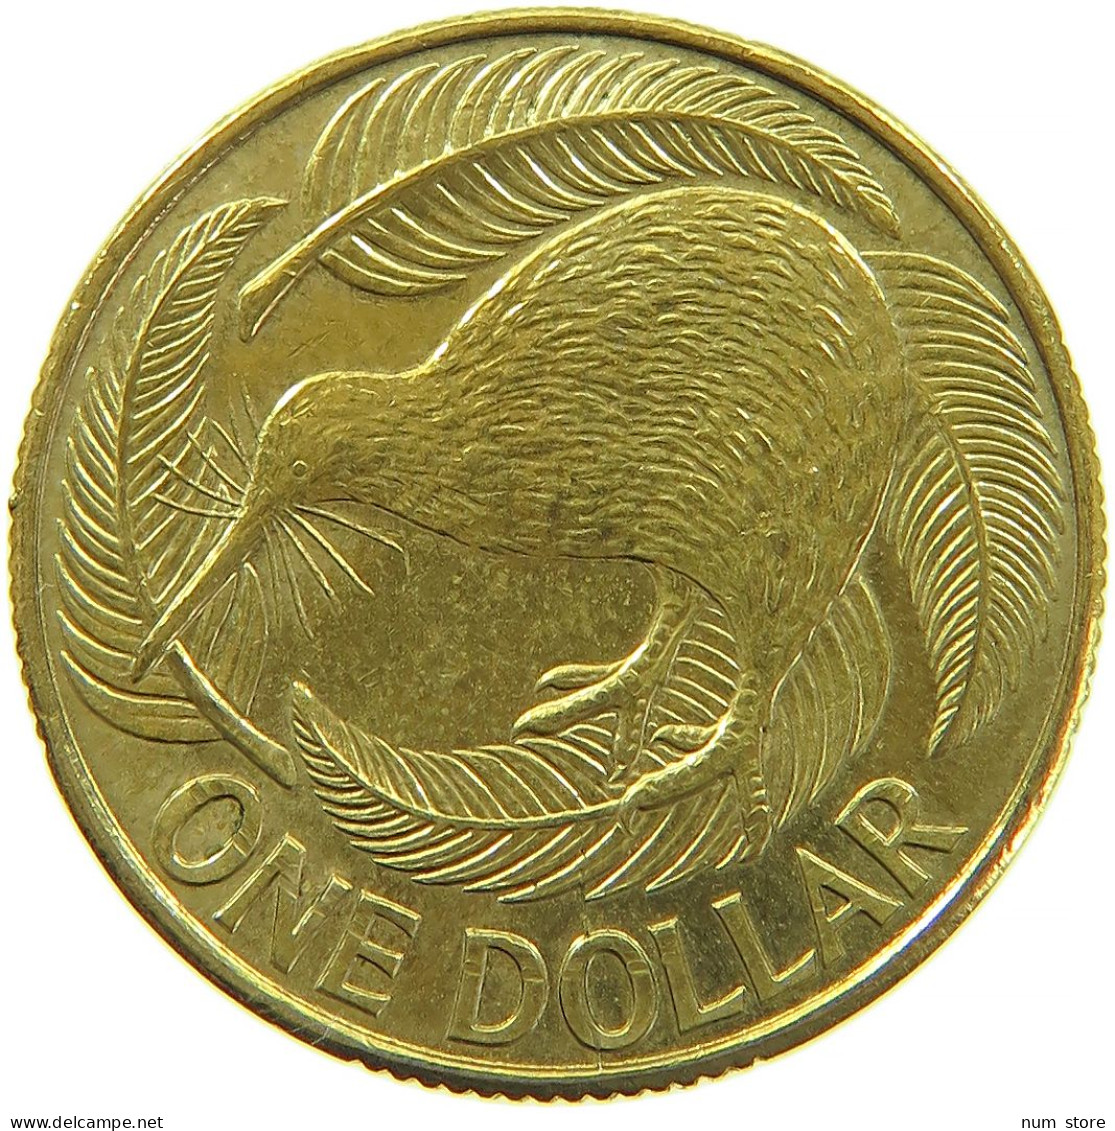 NEW ZEALAND 1 DOLLAR 2004 #s095 0653 - New Zealand